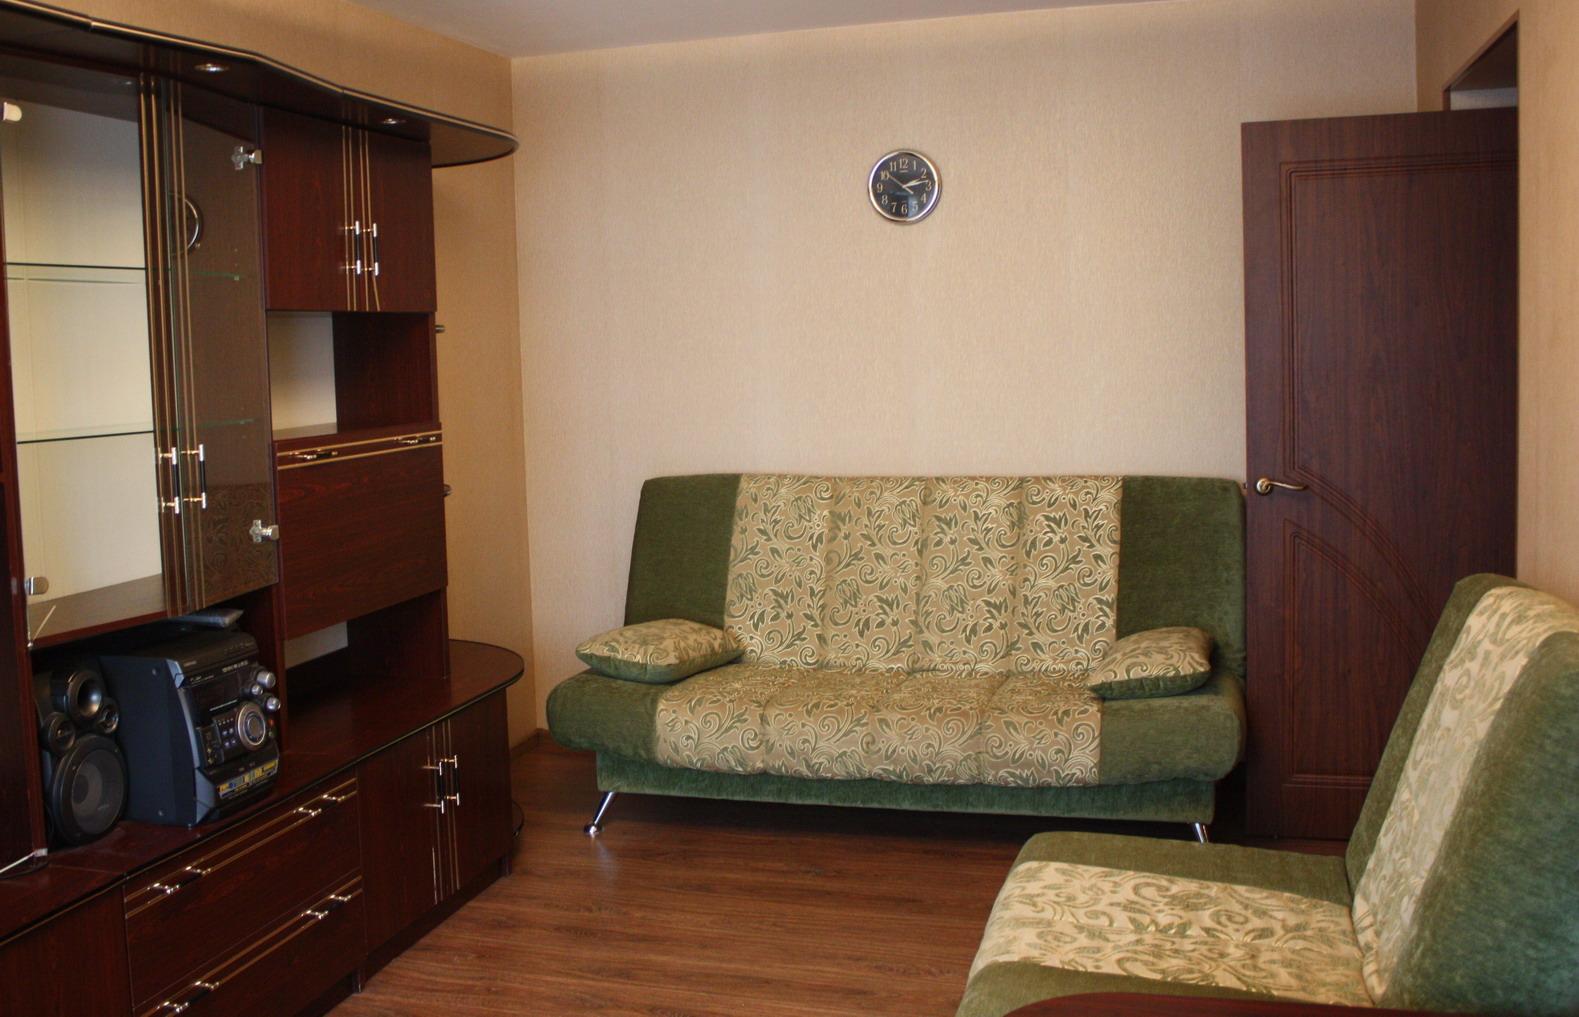 Сколько квартир в томске. Снять 2 комнатную квартиру в Томске.